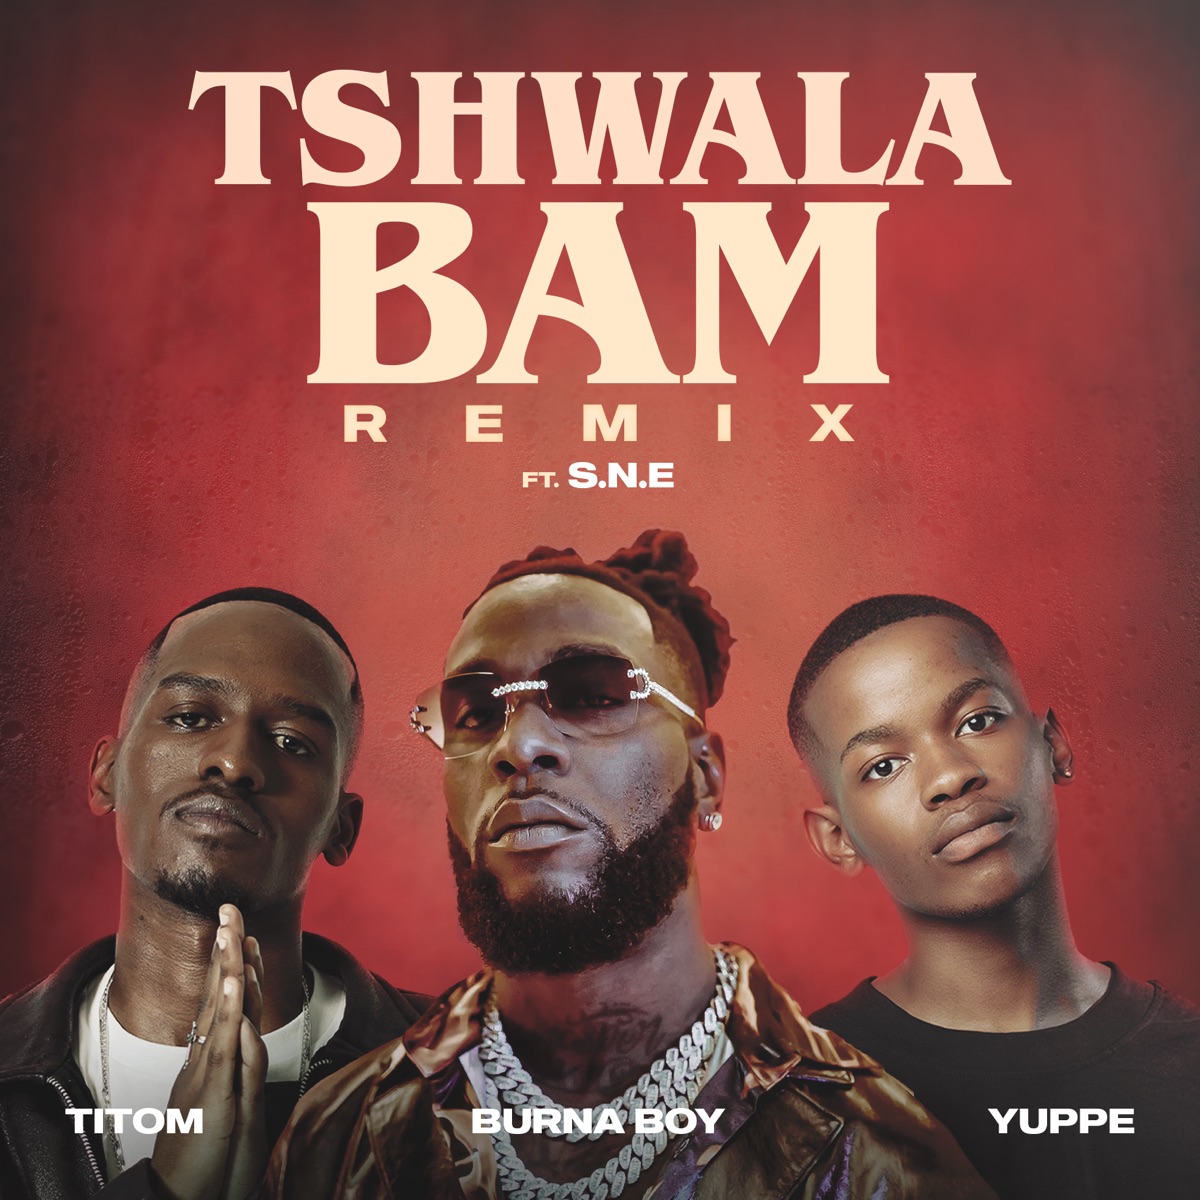 Titom, Yuppe &Amp; Burna Boy - Tshwala Bam (Feat. S.n.e) [Remix] 1